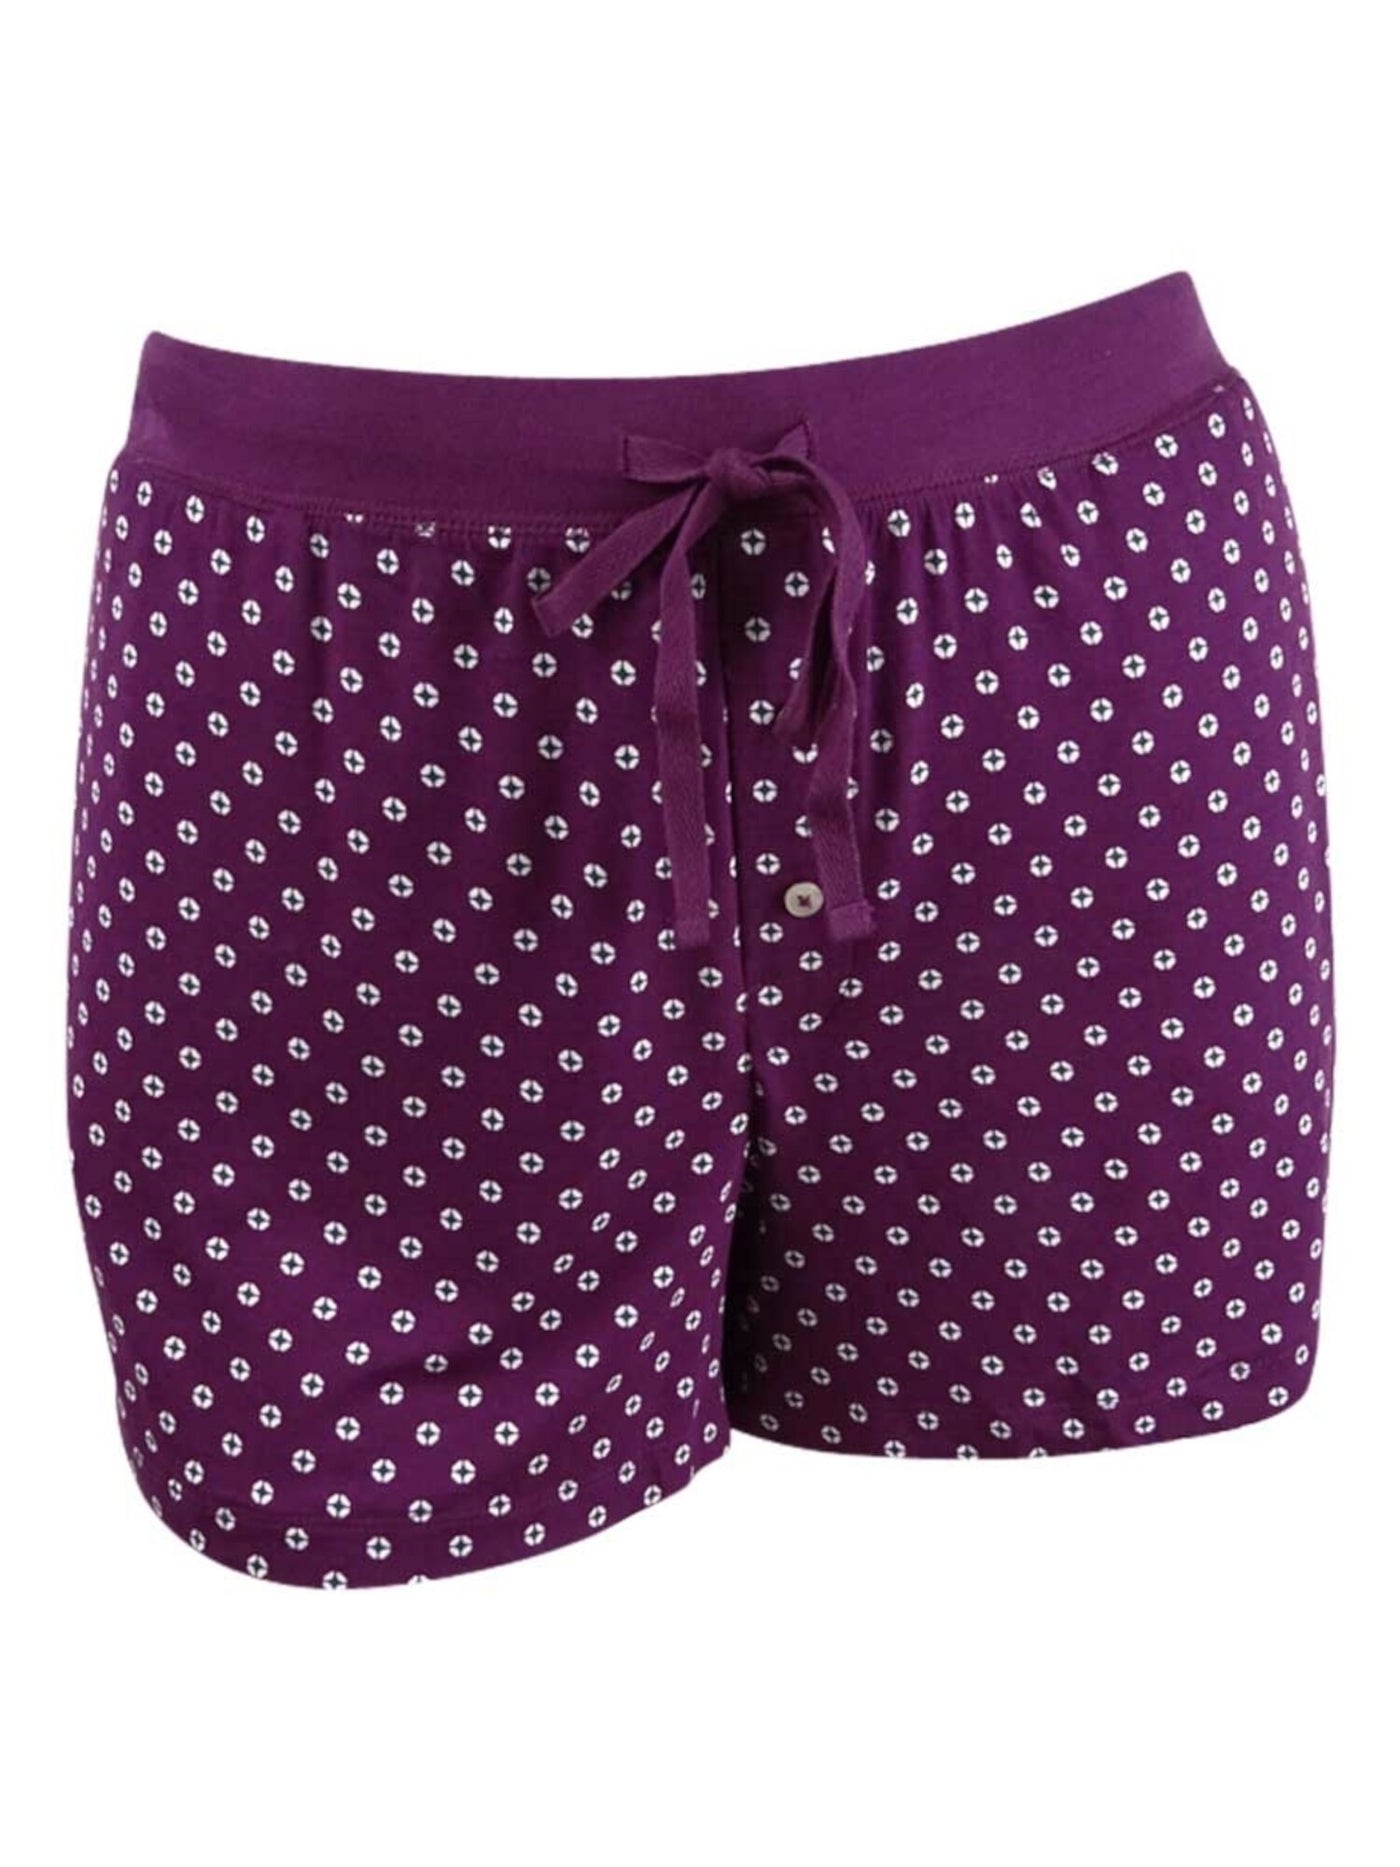 ALFANI Intimates Purple Rayon Everyday Shorts Size: M